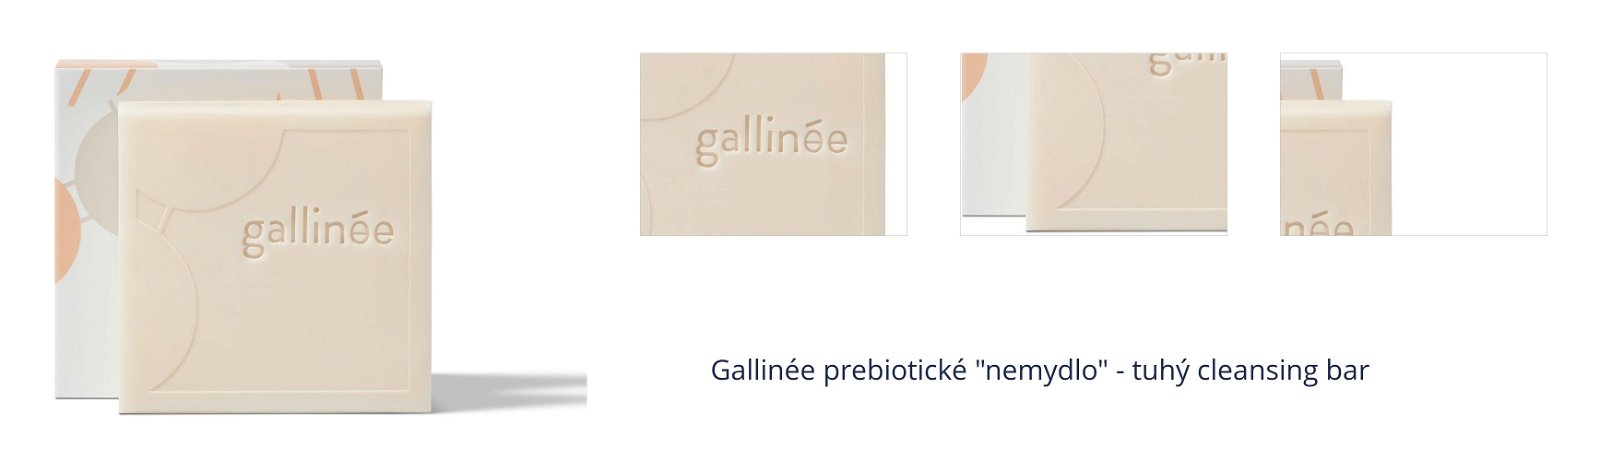 Gallinée prebiotické "nemydlo" - tuhý cleansing bar 7